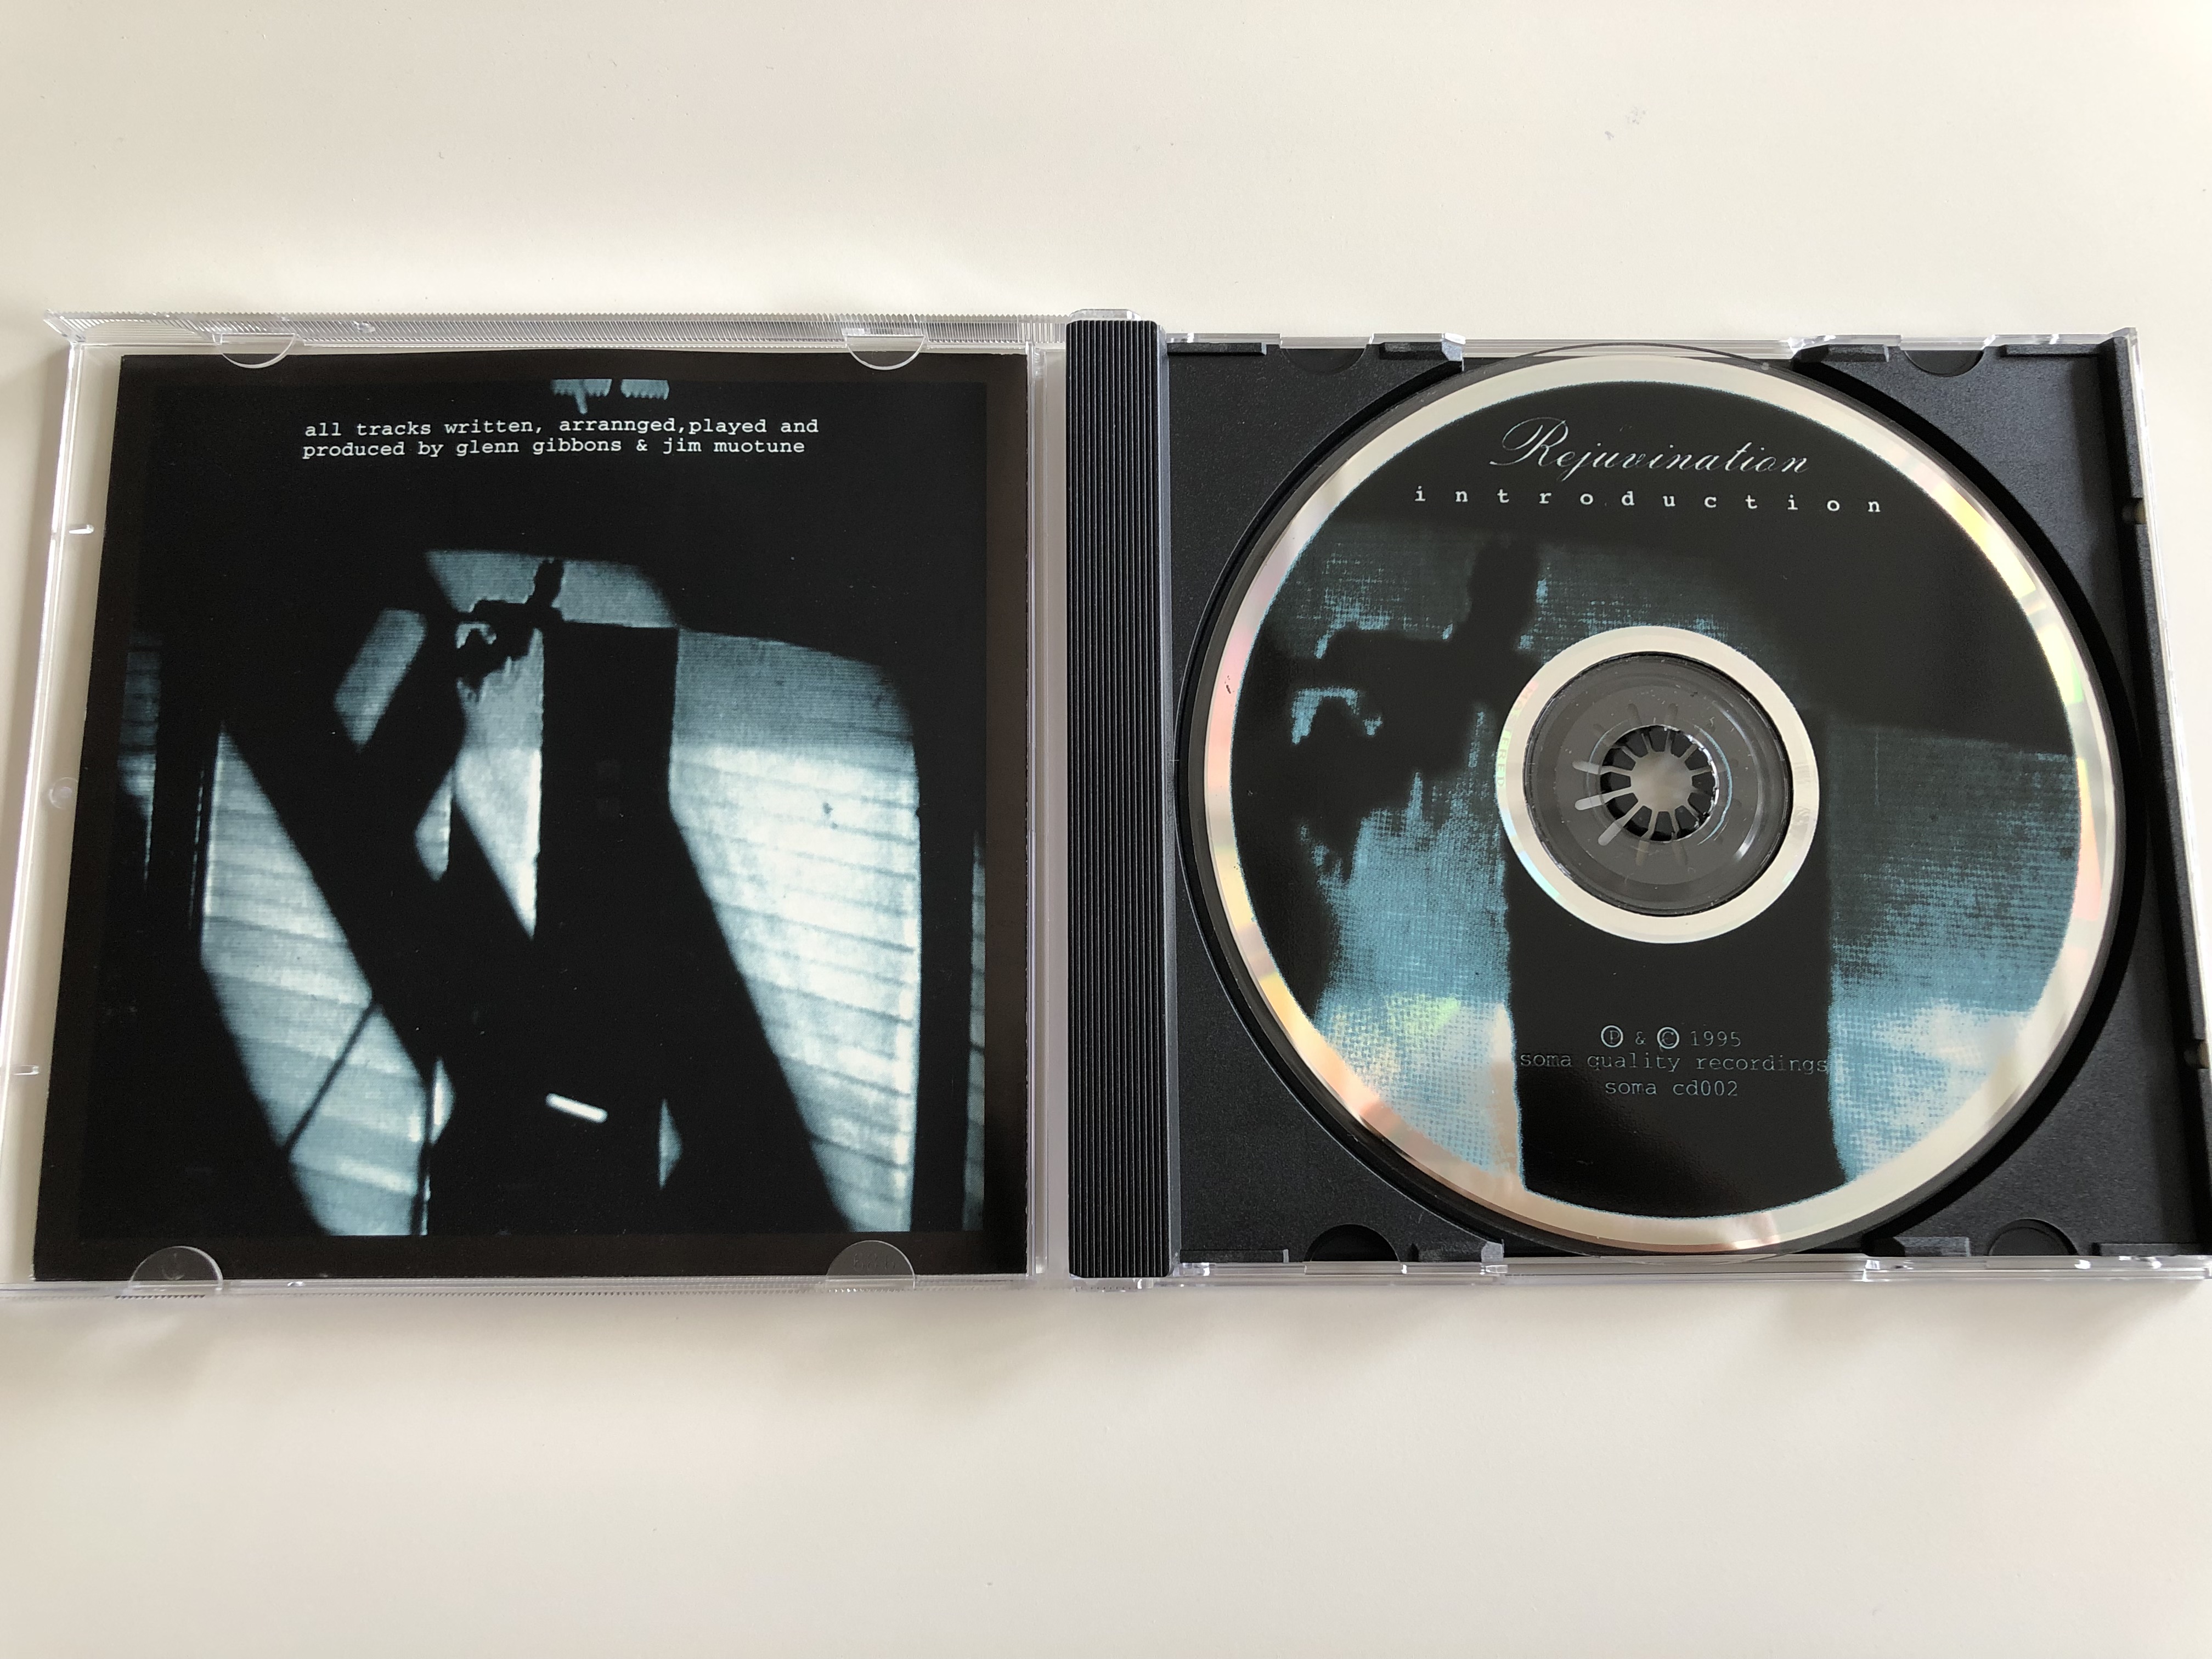 rejuvination-introduction-glenn-gibbons-jim-muotune-audio-cd-1995-soma-cd002-3-.jpg